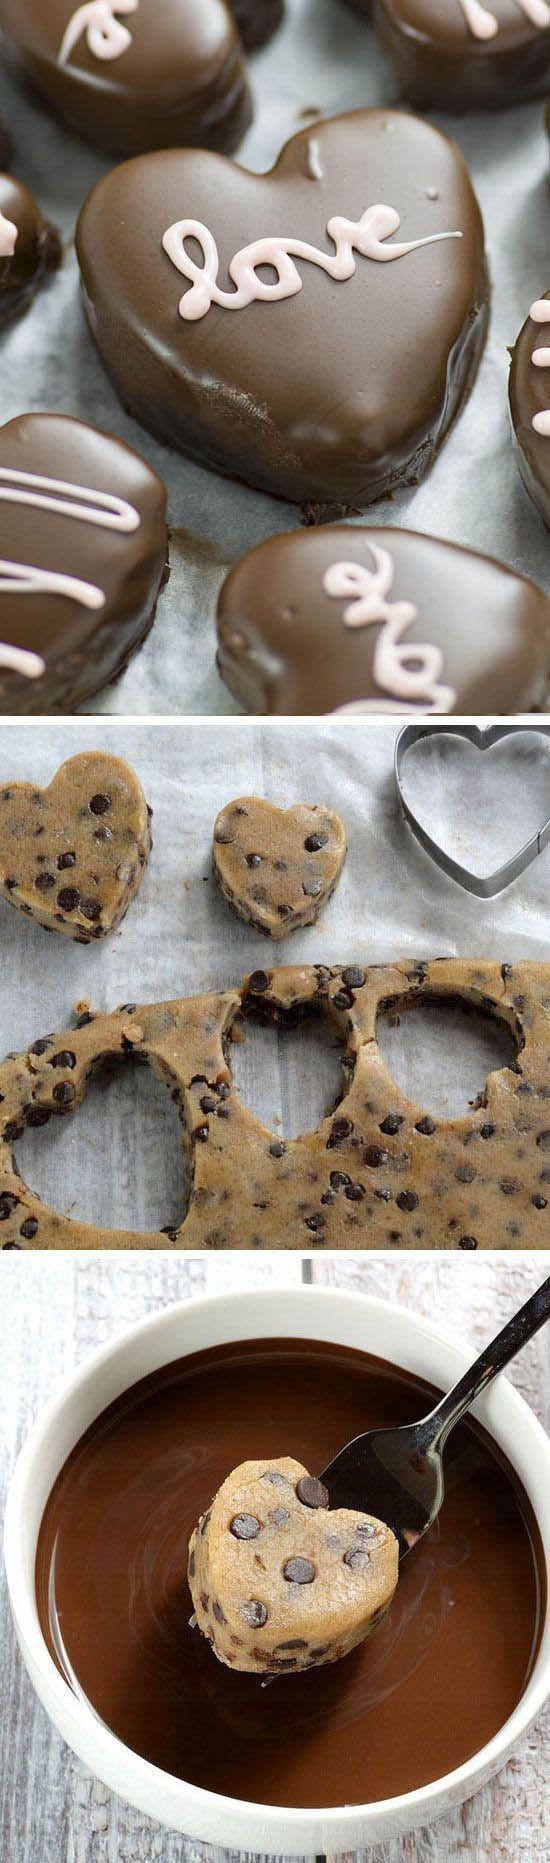 Chocolate Valentine Desserts
 Chocolate Chip Cookie Dough Valentine’s Hearts